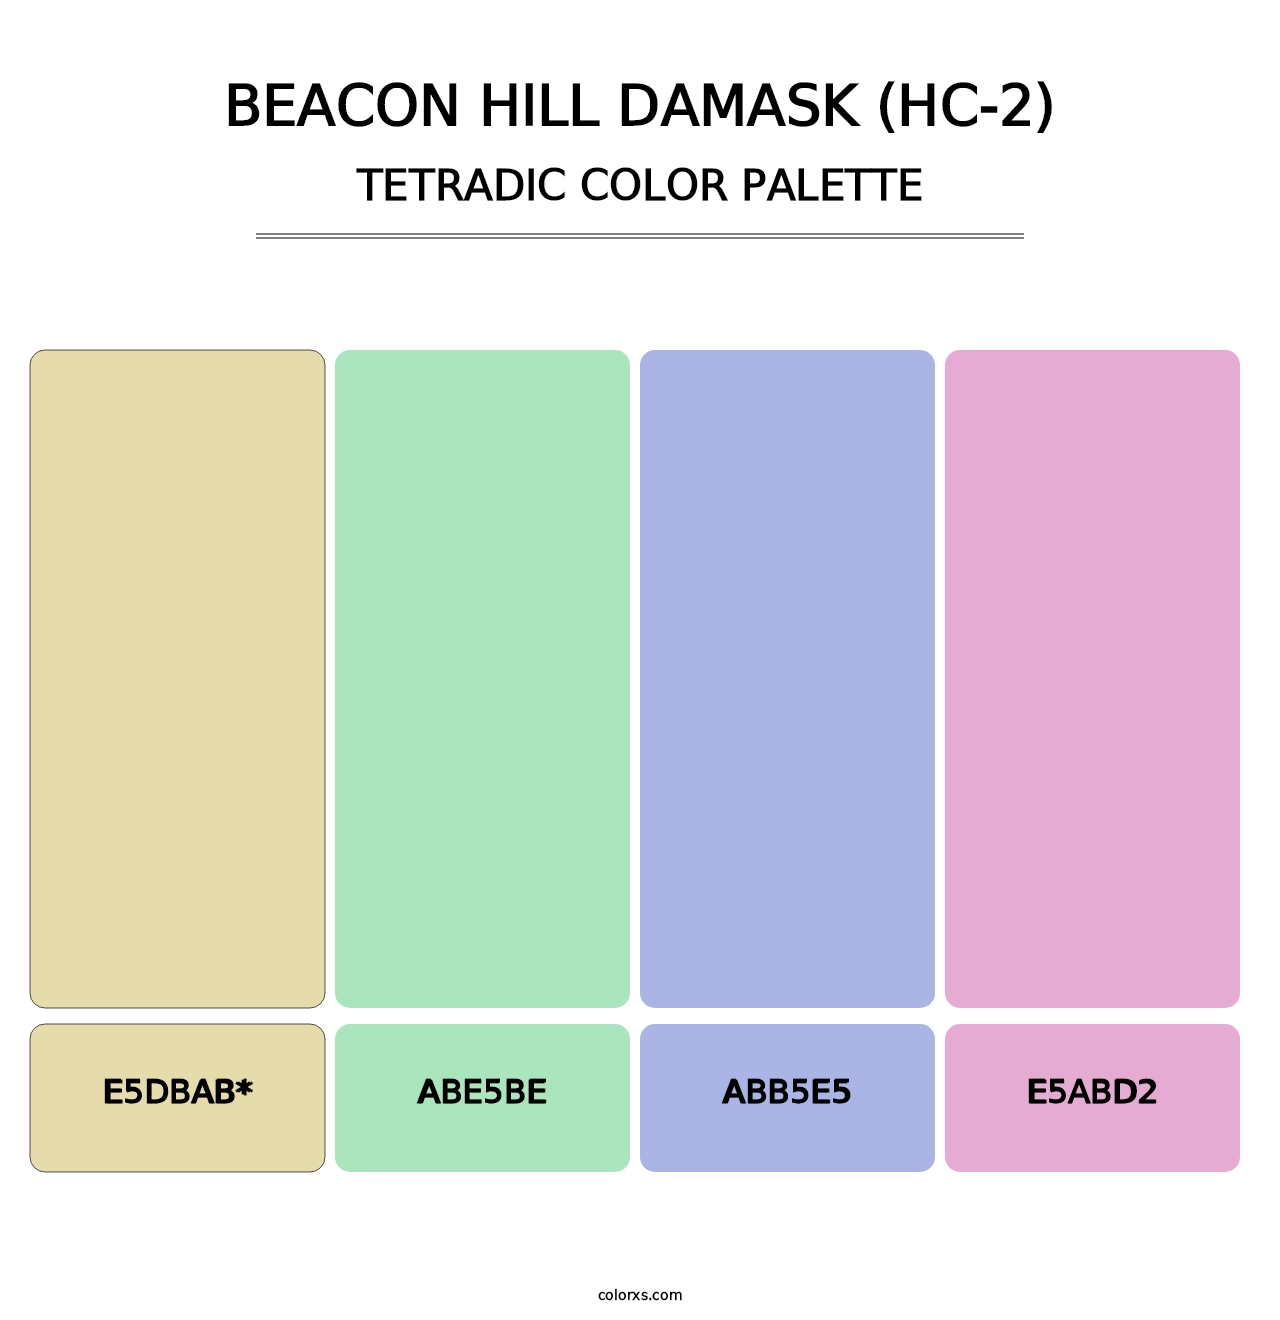 Beacon Hill Damask (HC-2) - Tetradic Color Palette